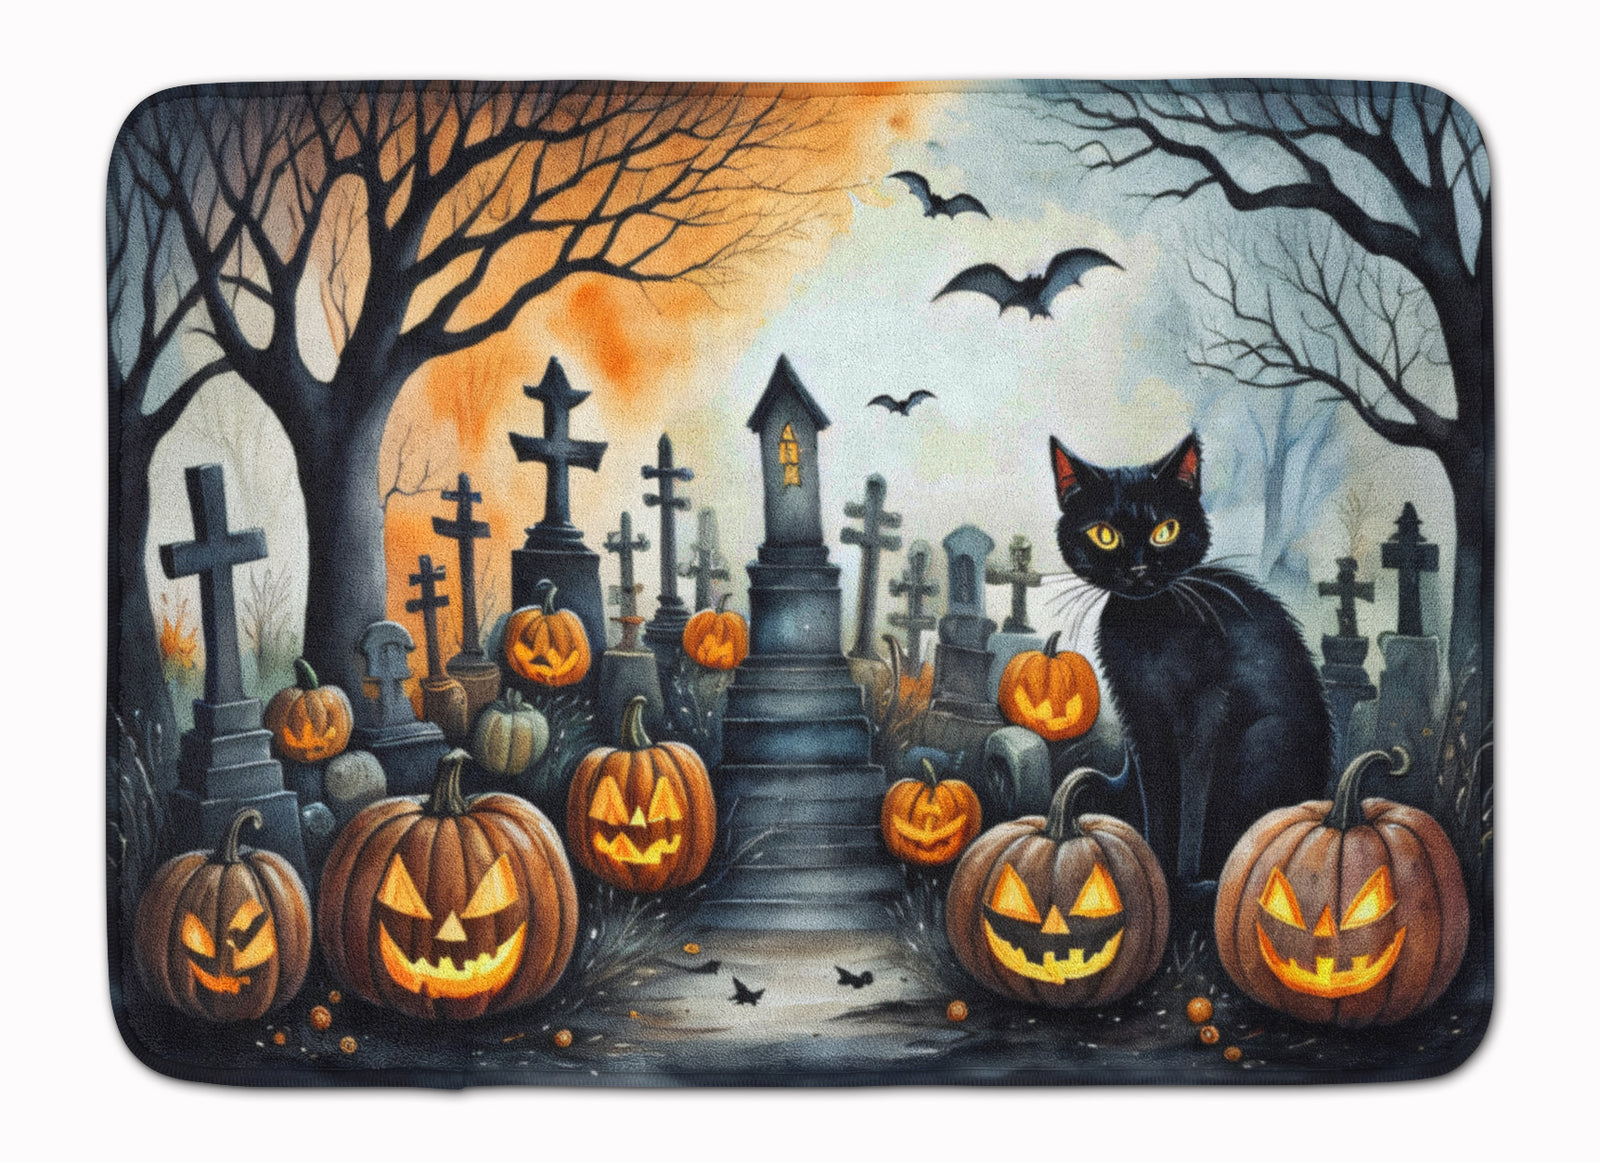 Buy this Black Cat Spooky Halloween Memory Foam Kitchen Mat